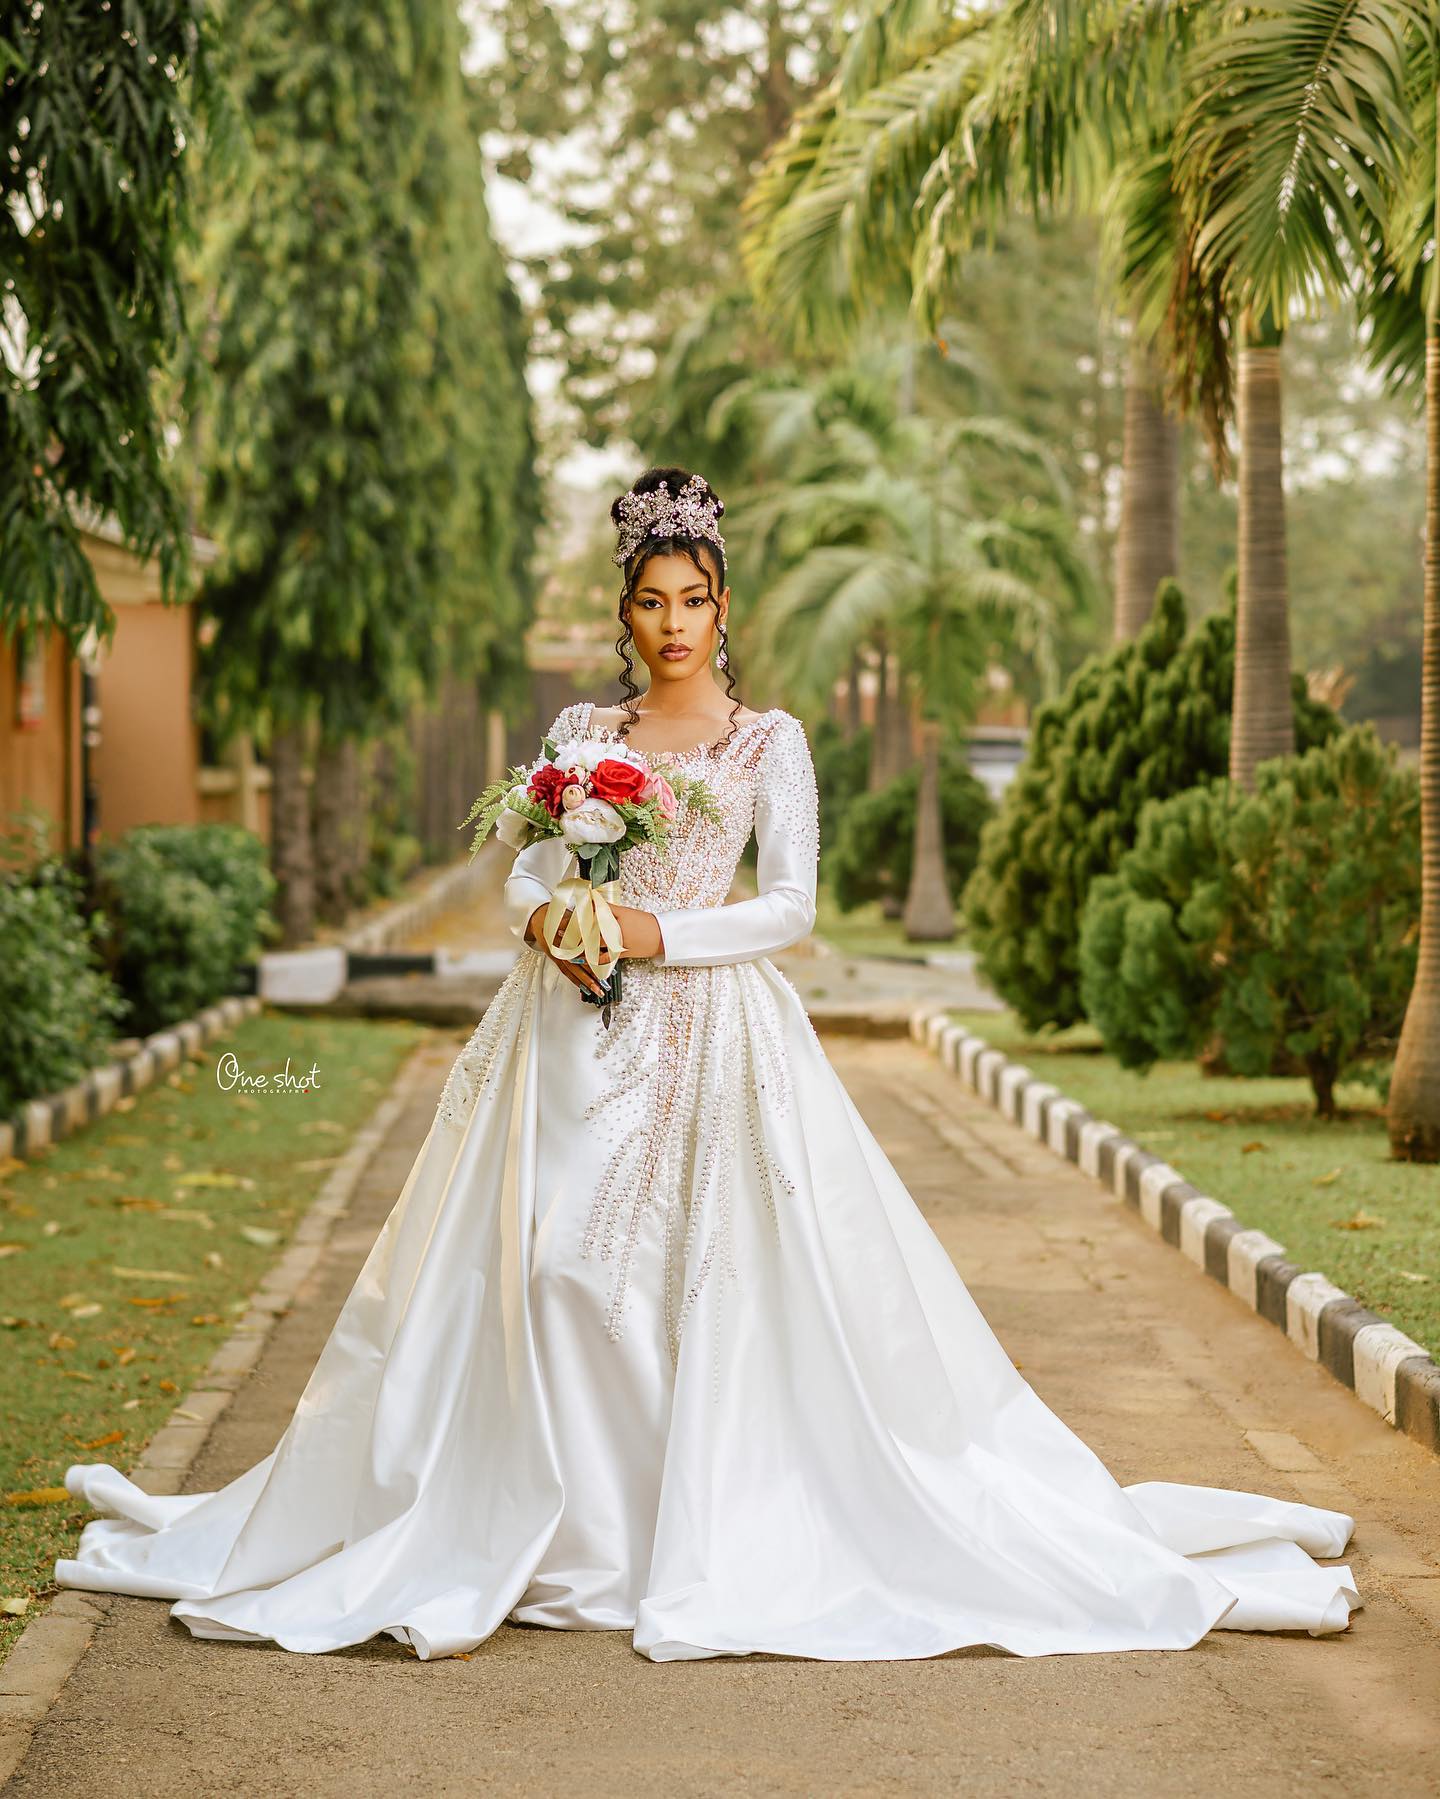 This Bridal Shoot With BBNaija Nini Brings Fairytale To Life 